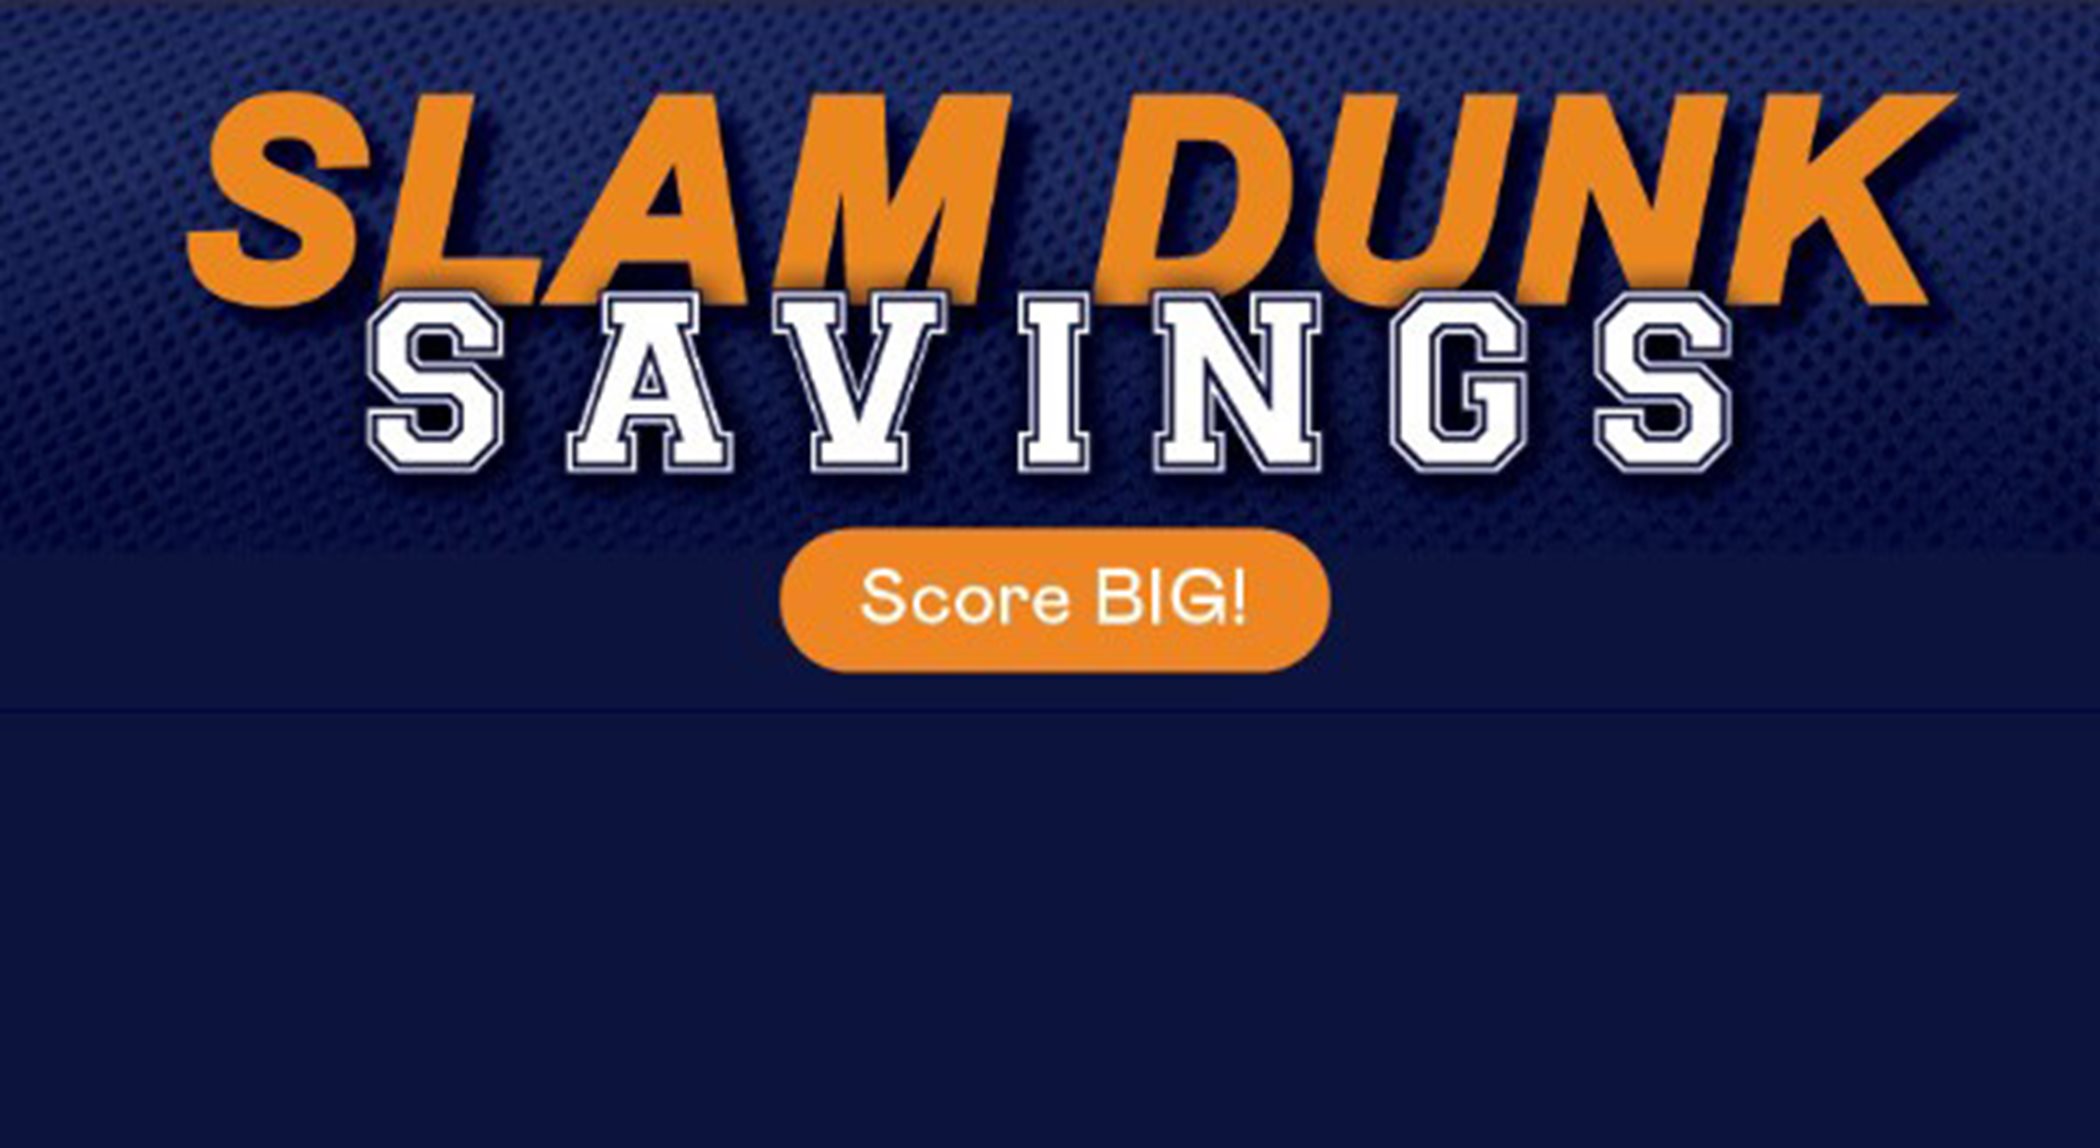 Text: Slam Dunk Savings Score Big